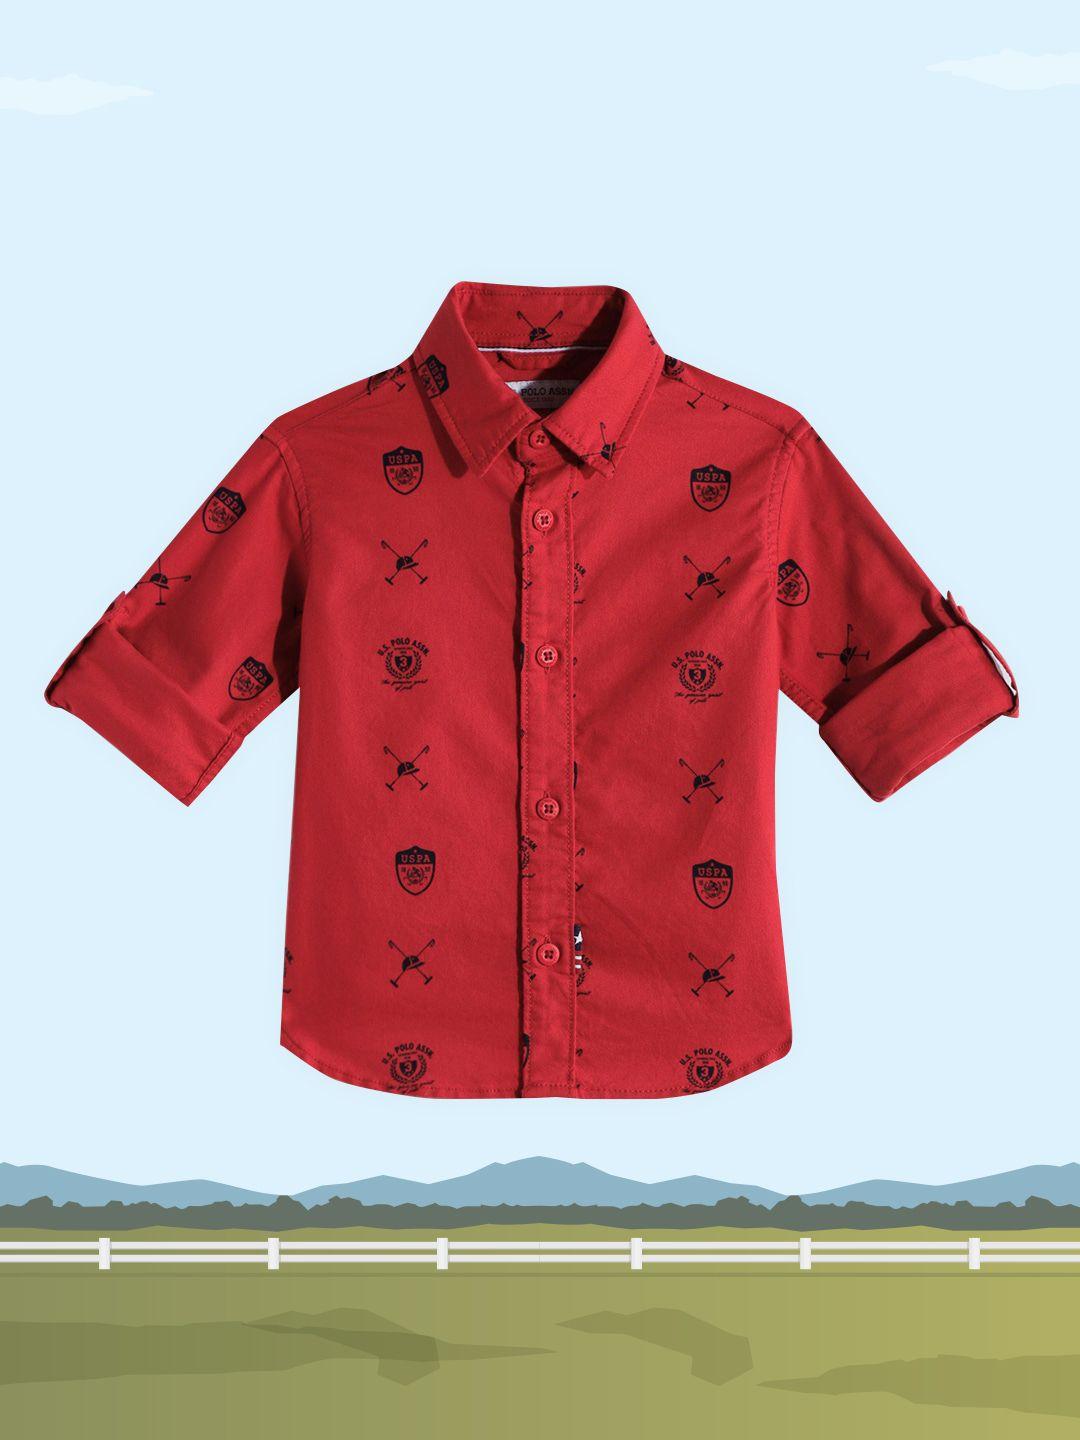 u.s. polo assn. kids boys red brand logo printed pure cotton casual shirt